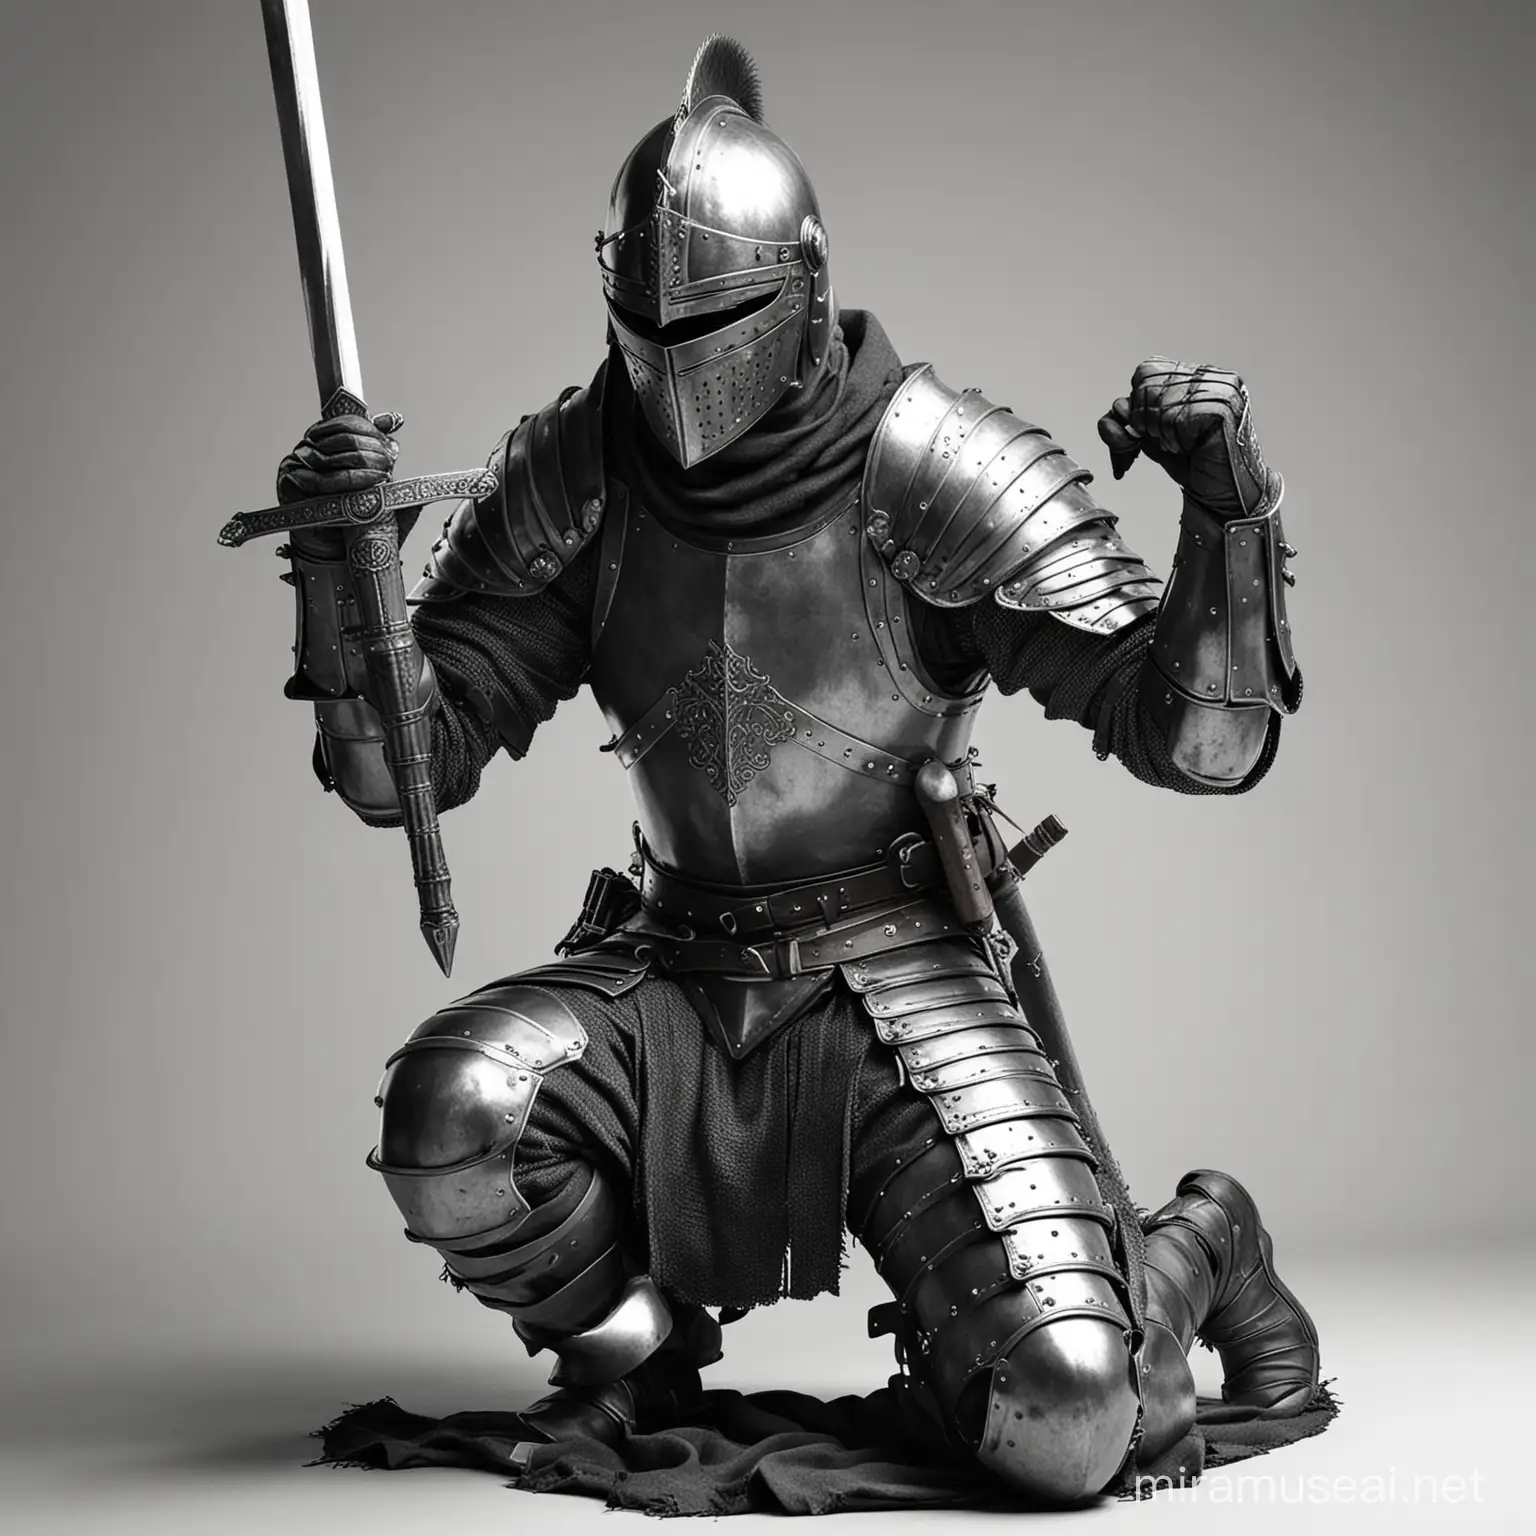 Medieval Knight Kneeling with Sword on Helmet